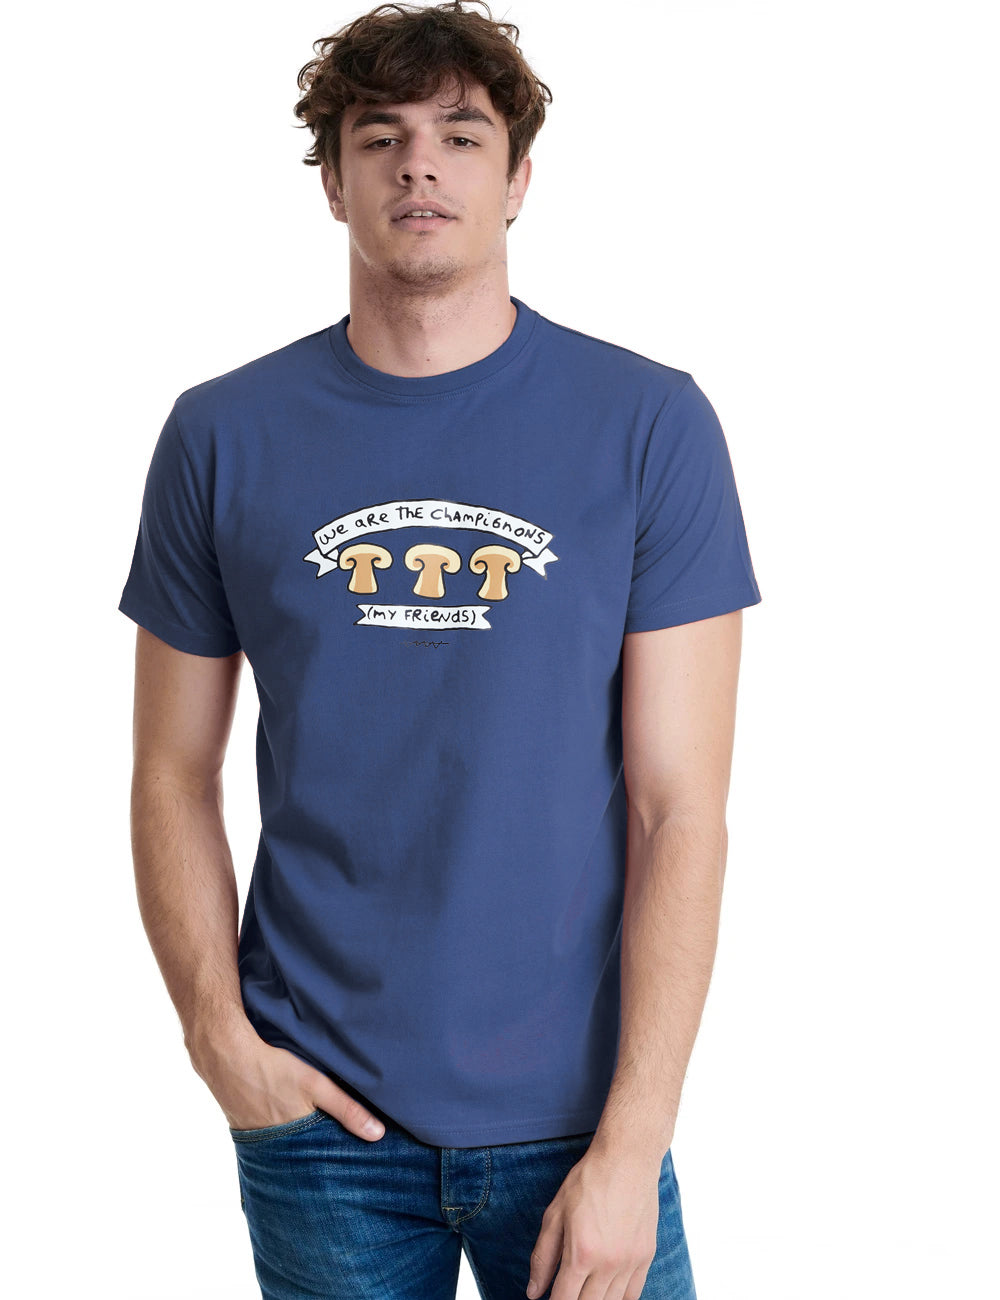 Champignions Mens T-Shirt